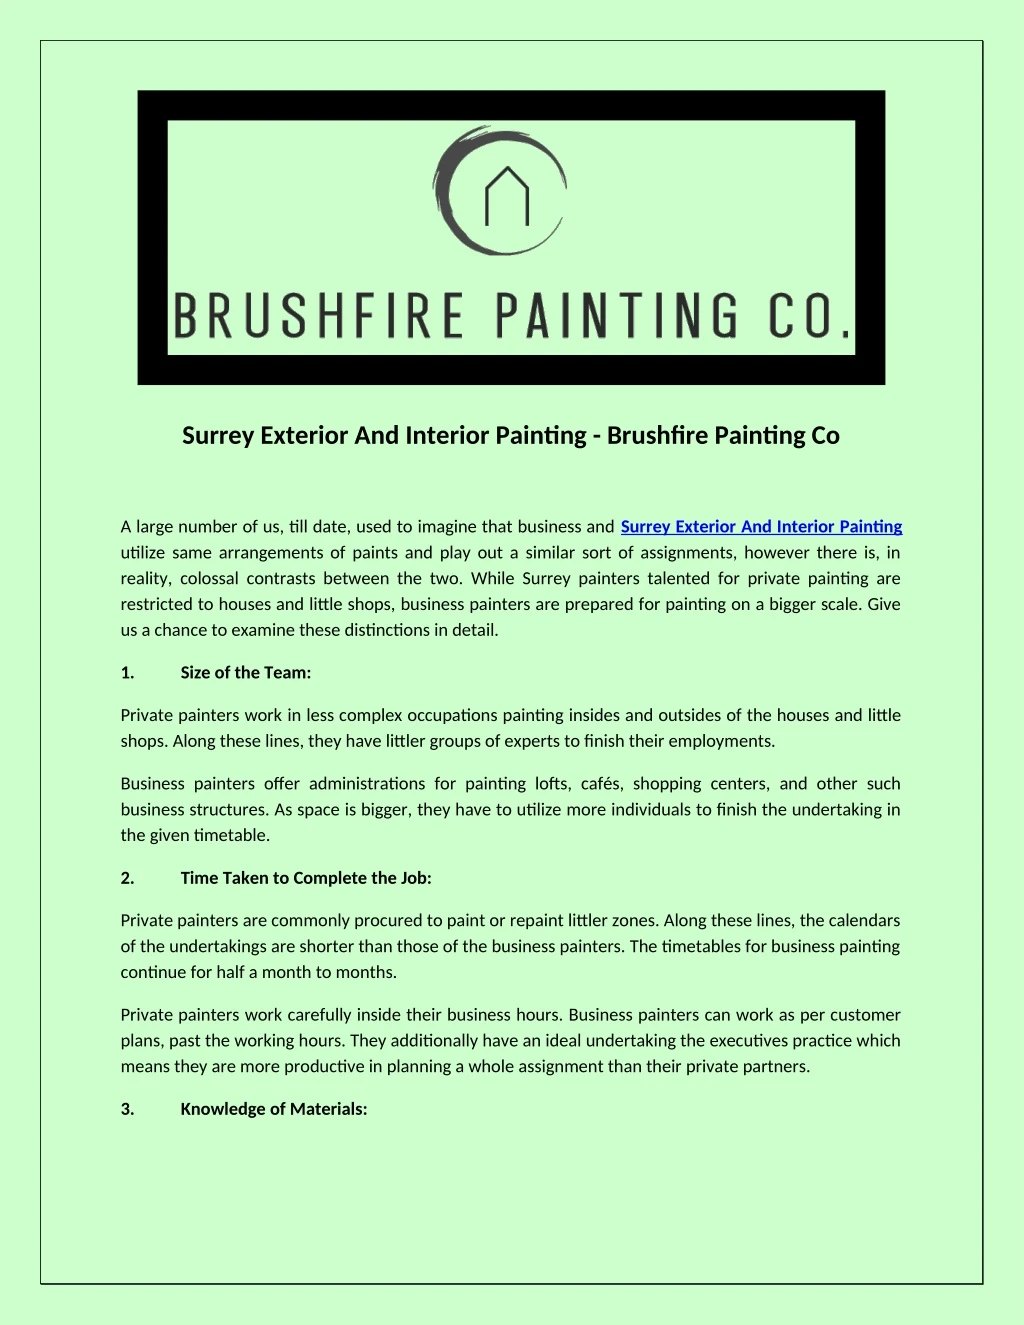 surrey exterior and interior painting brushfire